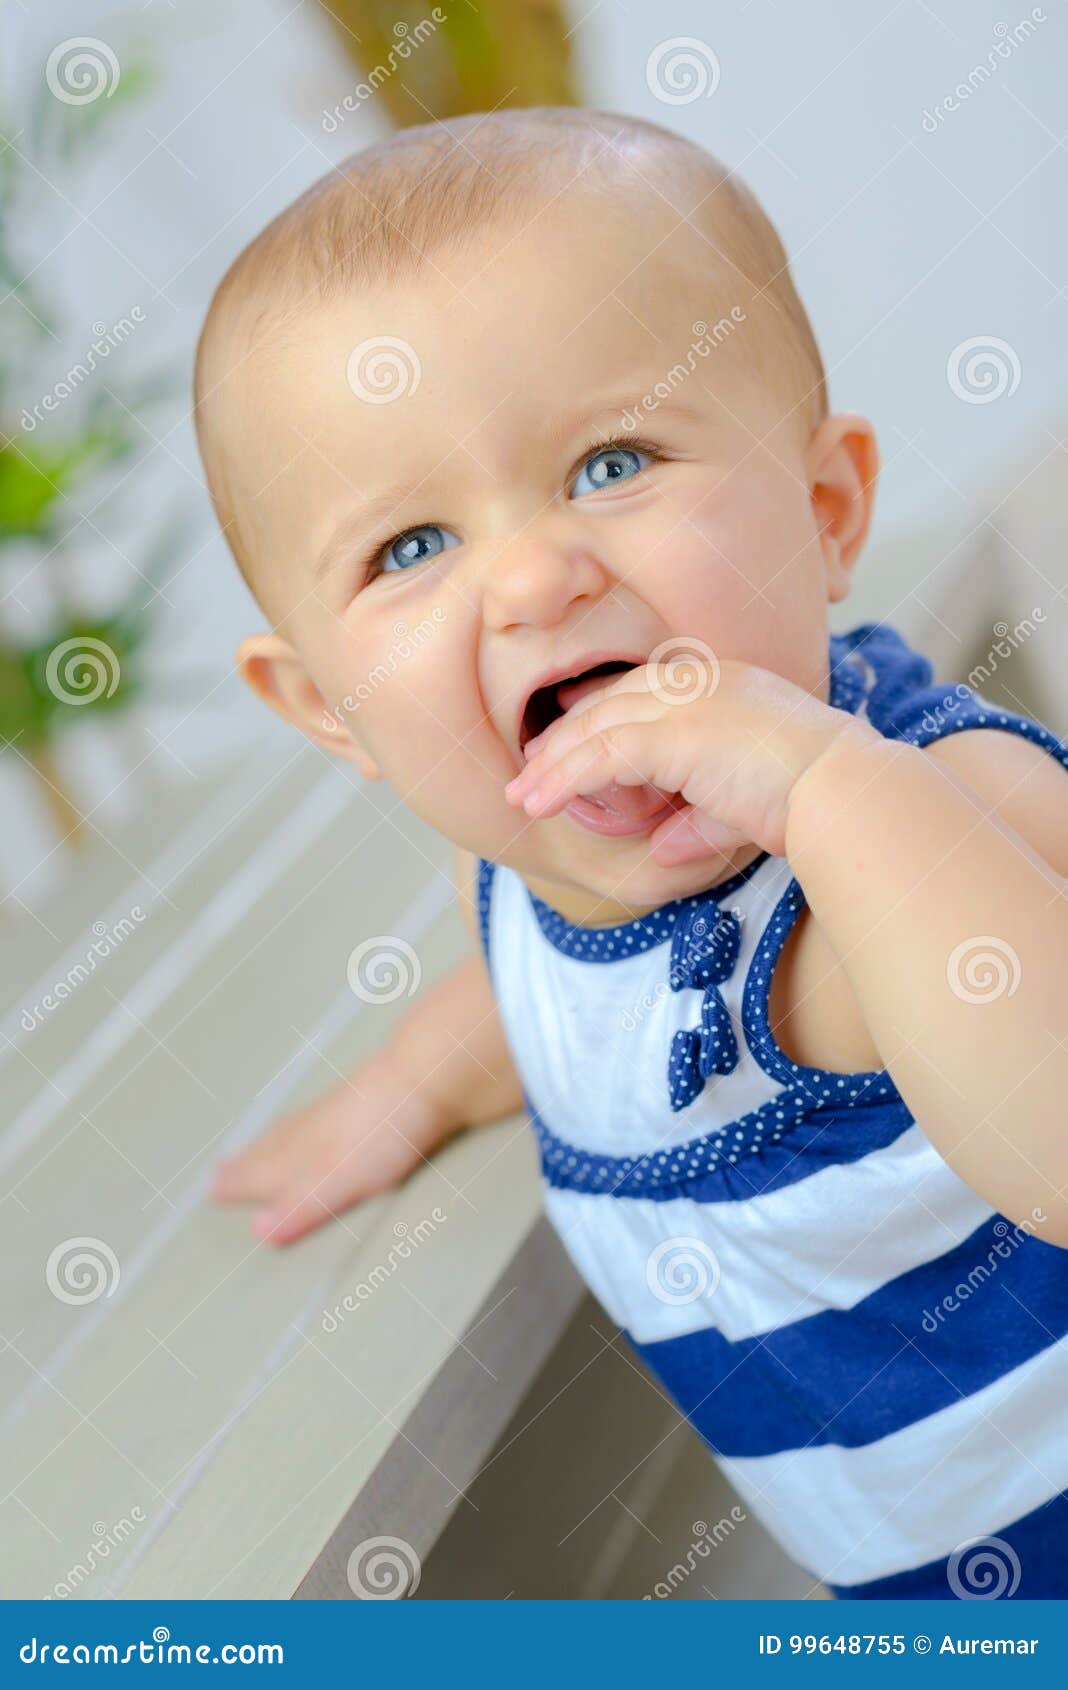 Cute baby sucking finger stock image. Image of eyes, beautiful - 99648755